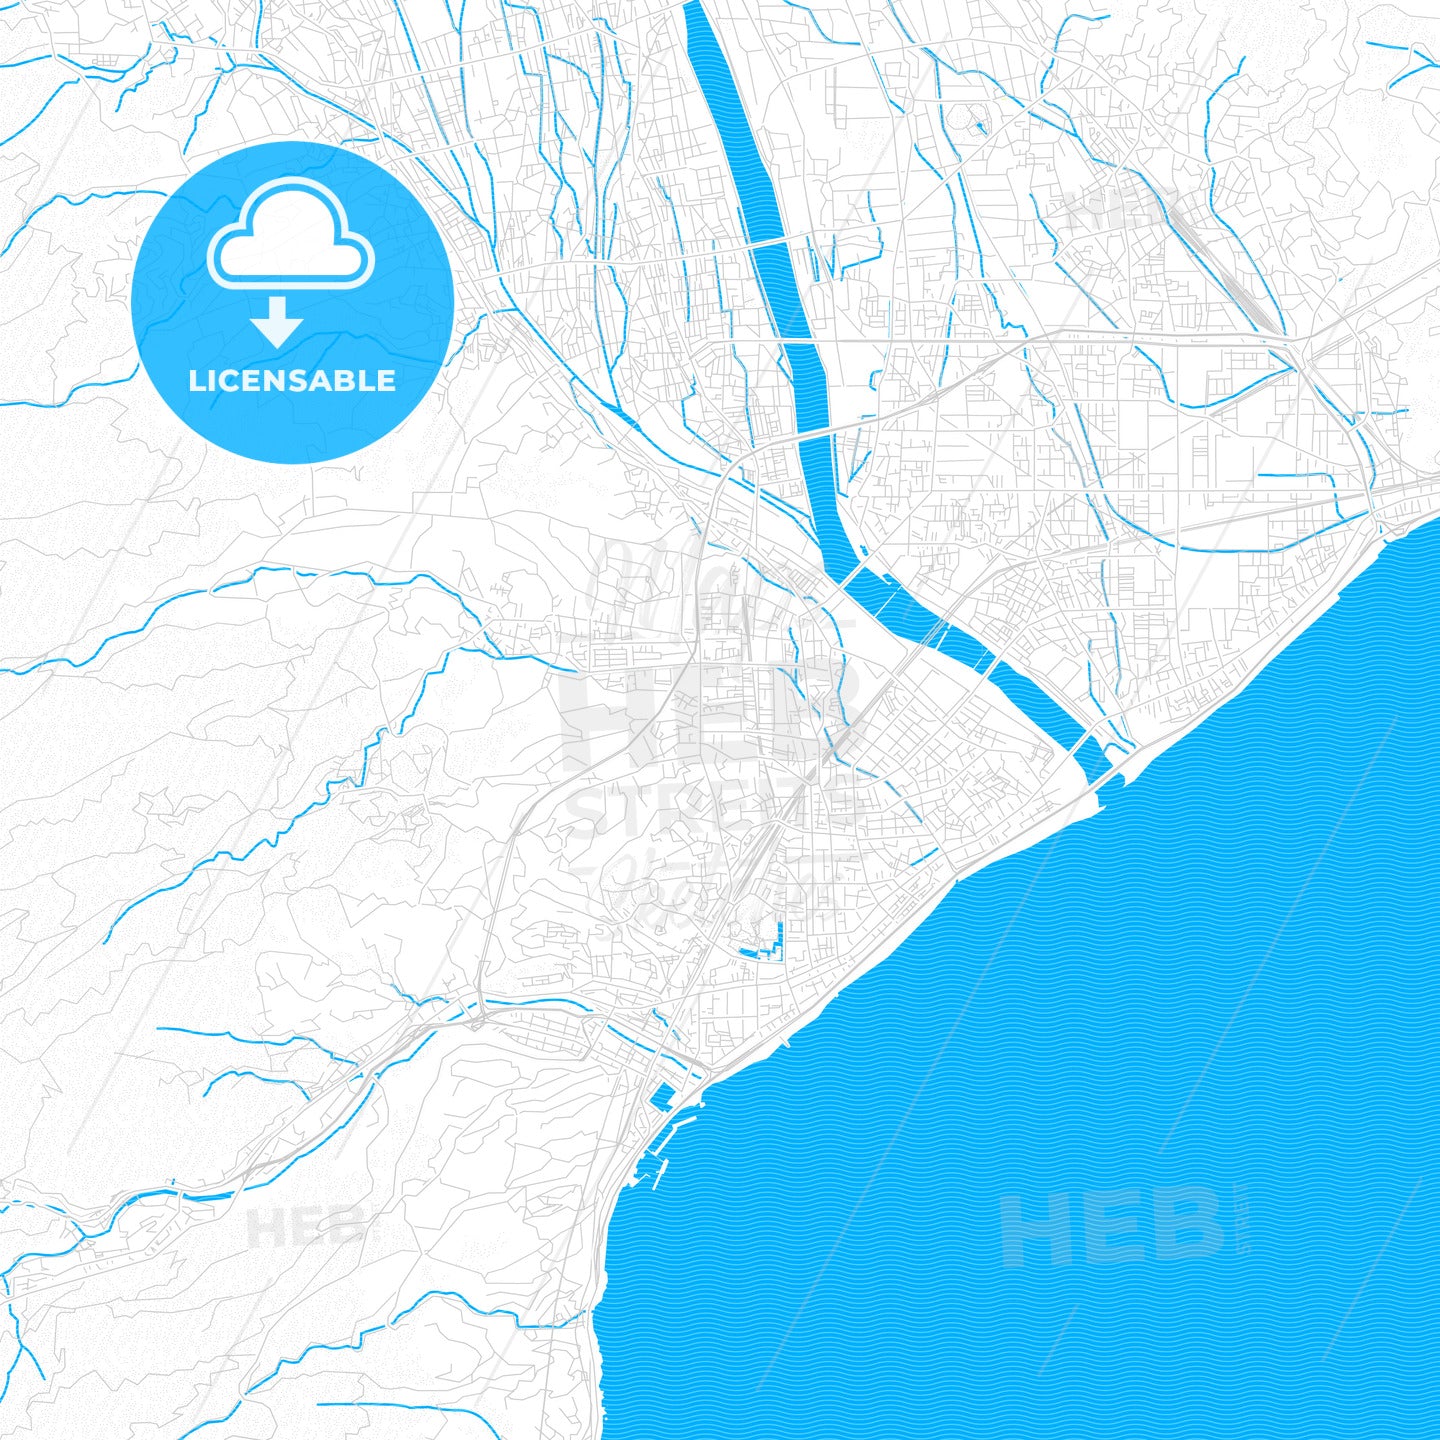 Odawara, Japan PDF vector map with water in focus